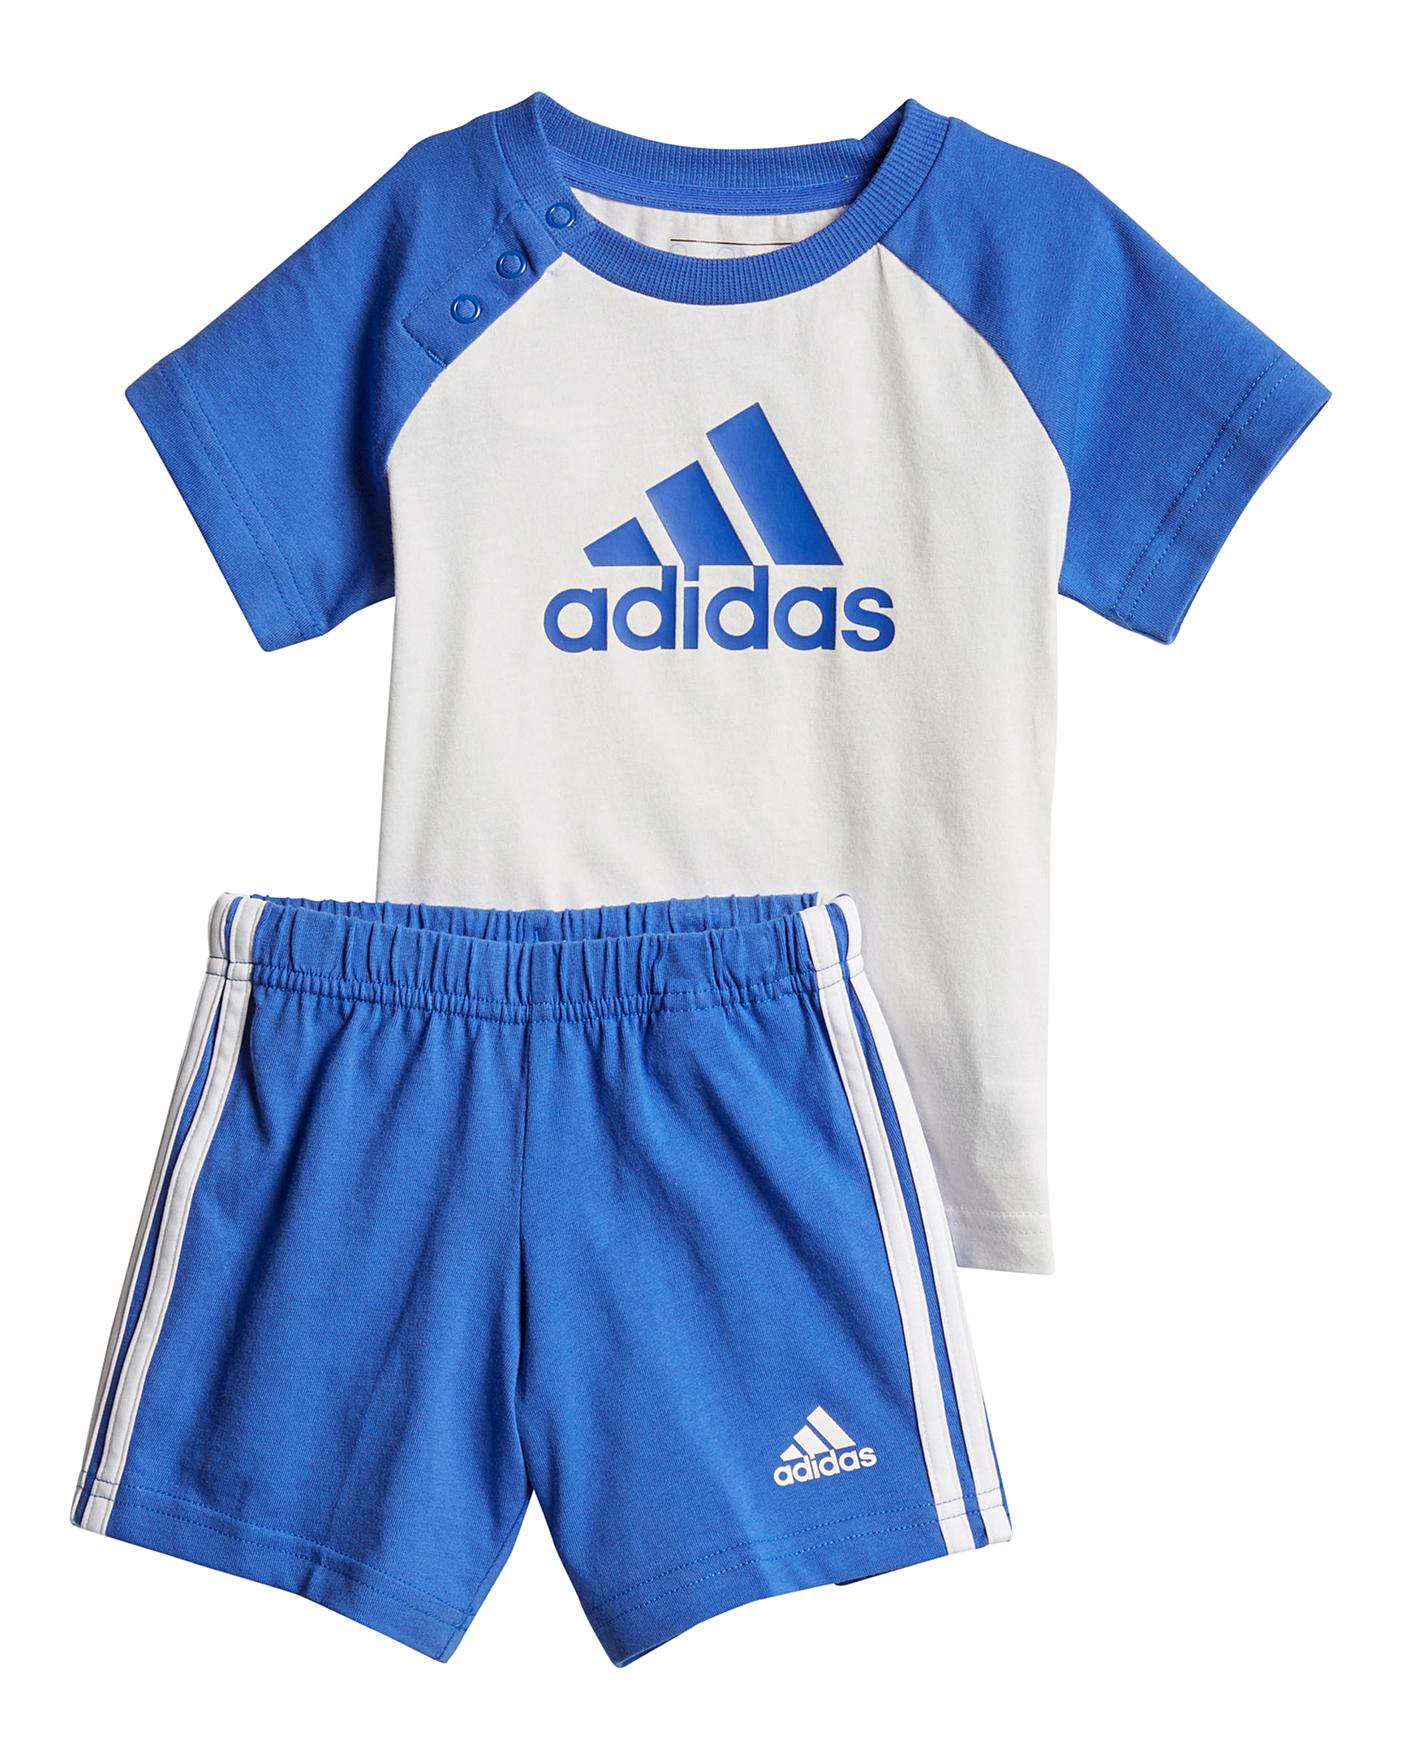 adidas Infant Summer Set Boys | Oxendales